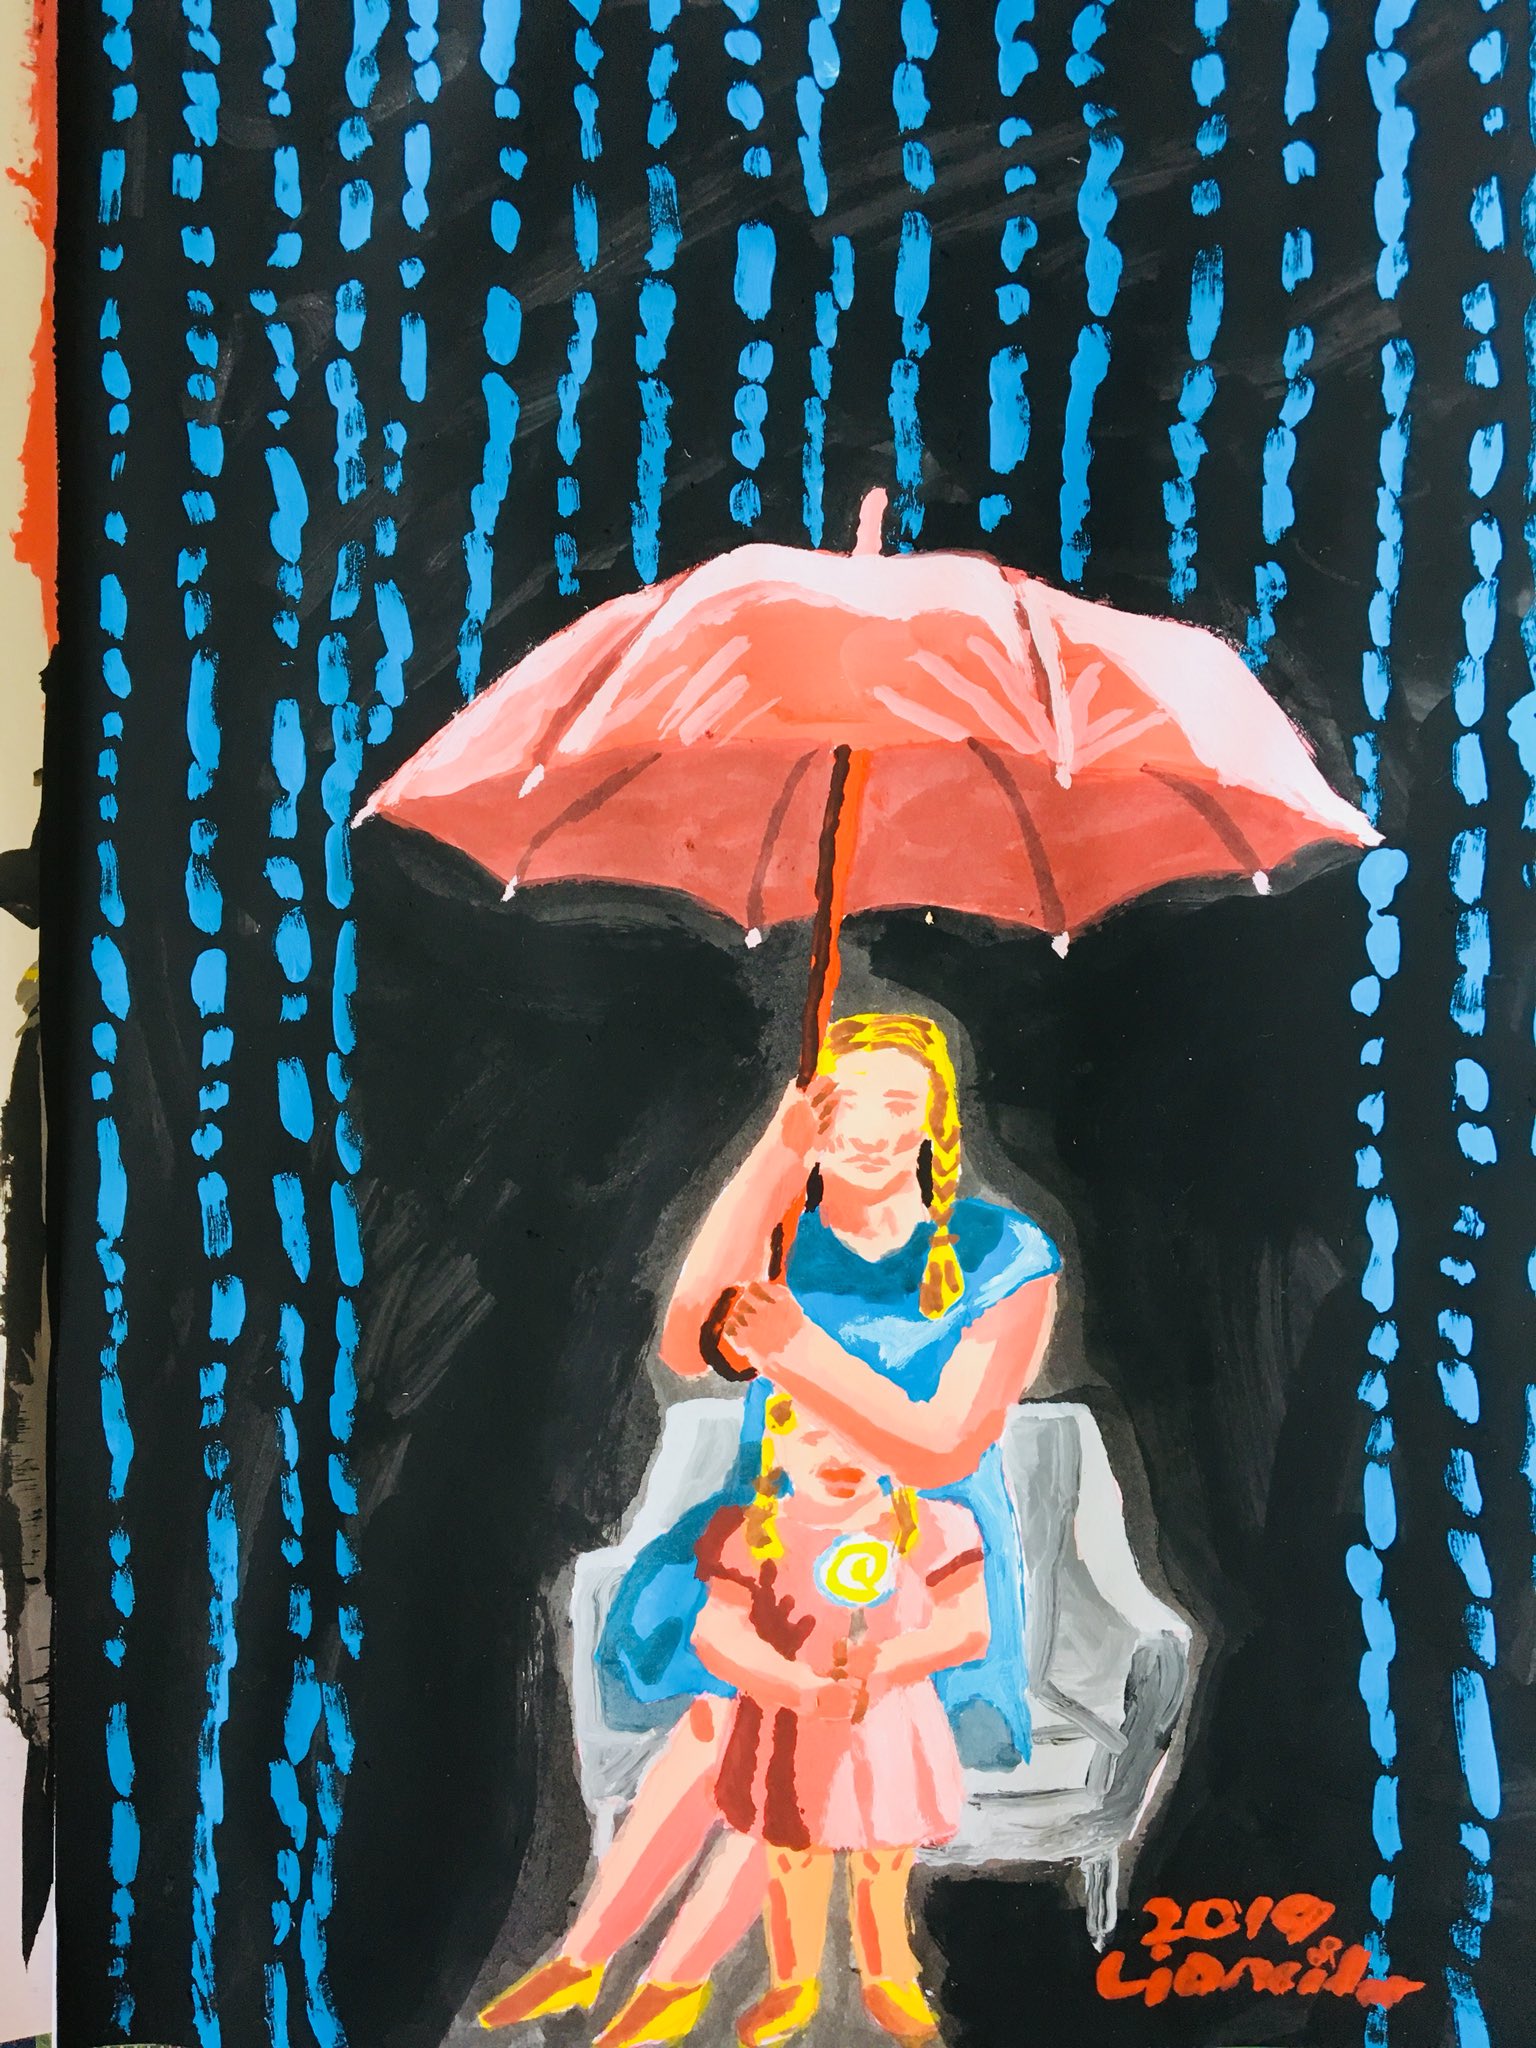 Lioncider 雨ふる雨傘 雨傘 Illustration Drawing Umbrella Person Black Family Line Rain Image Art Colorful Acrylicpaintng Picture Painting イラスト アート カラフル 作品 アクリル絵の具 ドローイング 絵